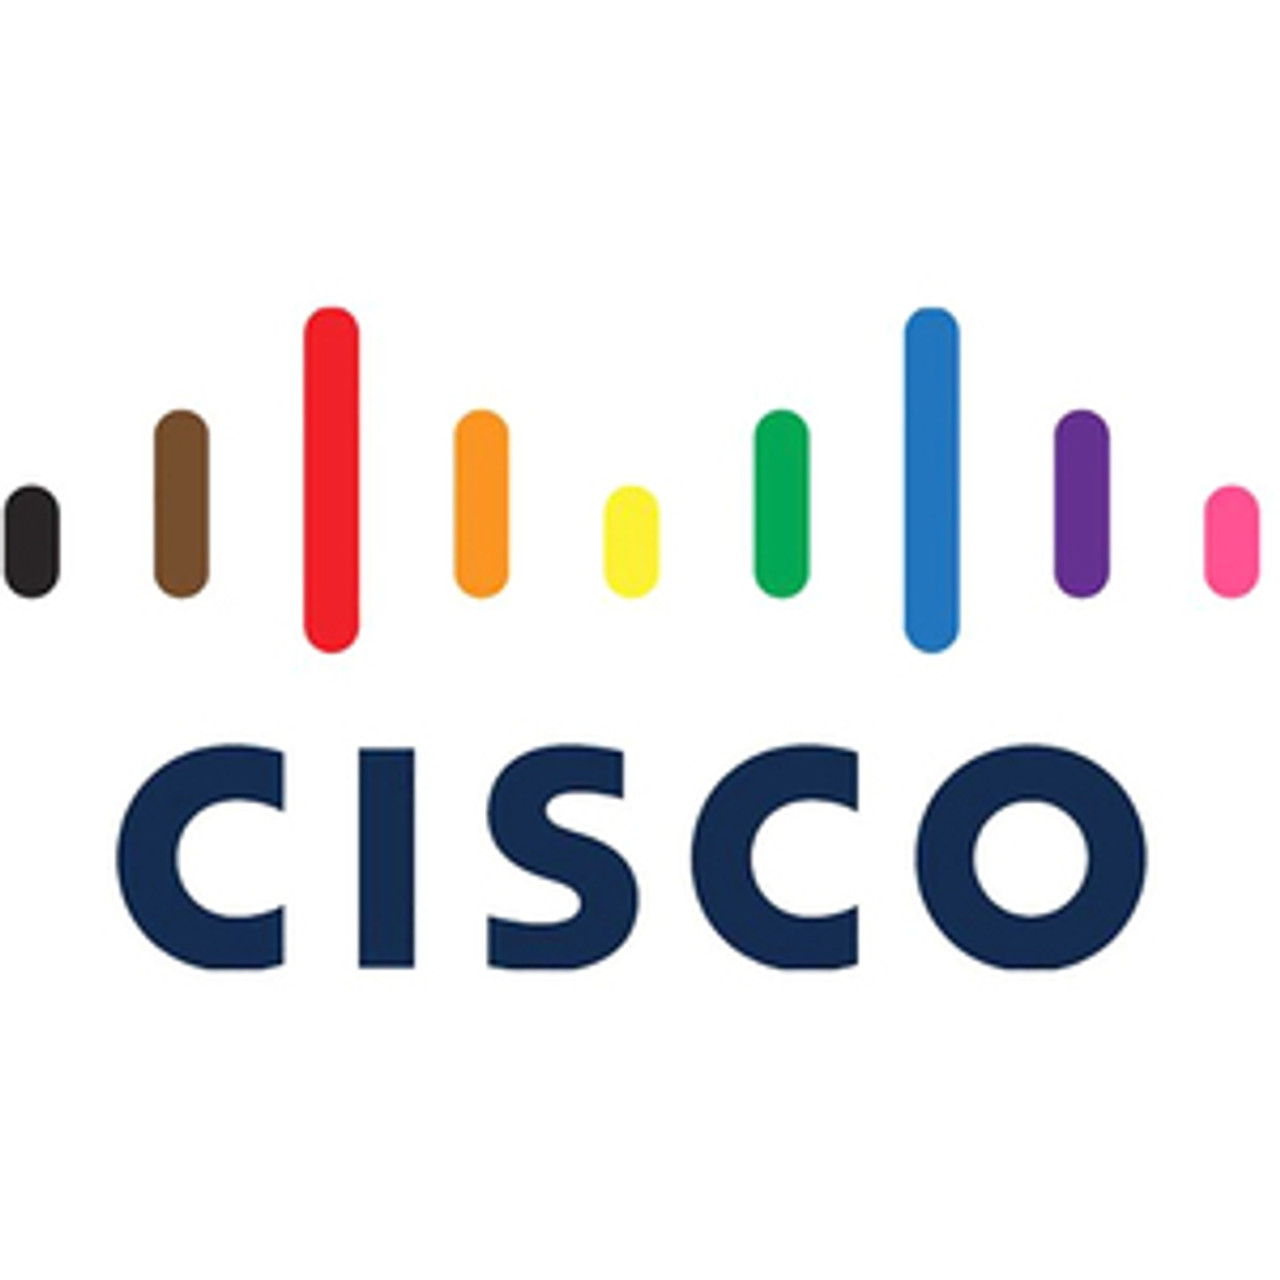 Cisco 12 TB Hard Drive - 3.5" Internal - SAS (12Gb/s SAS)